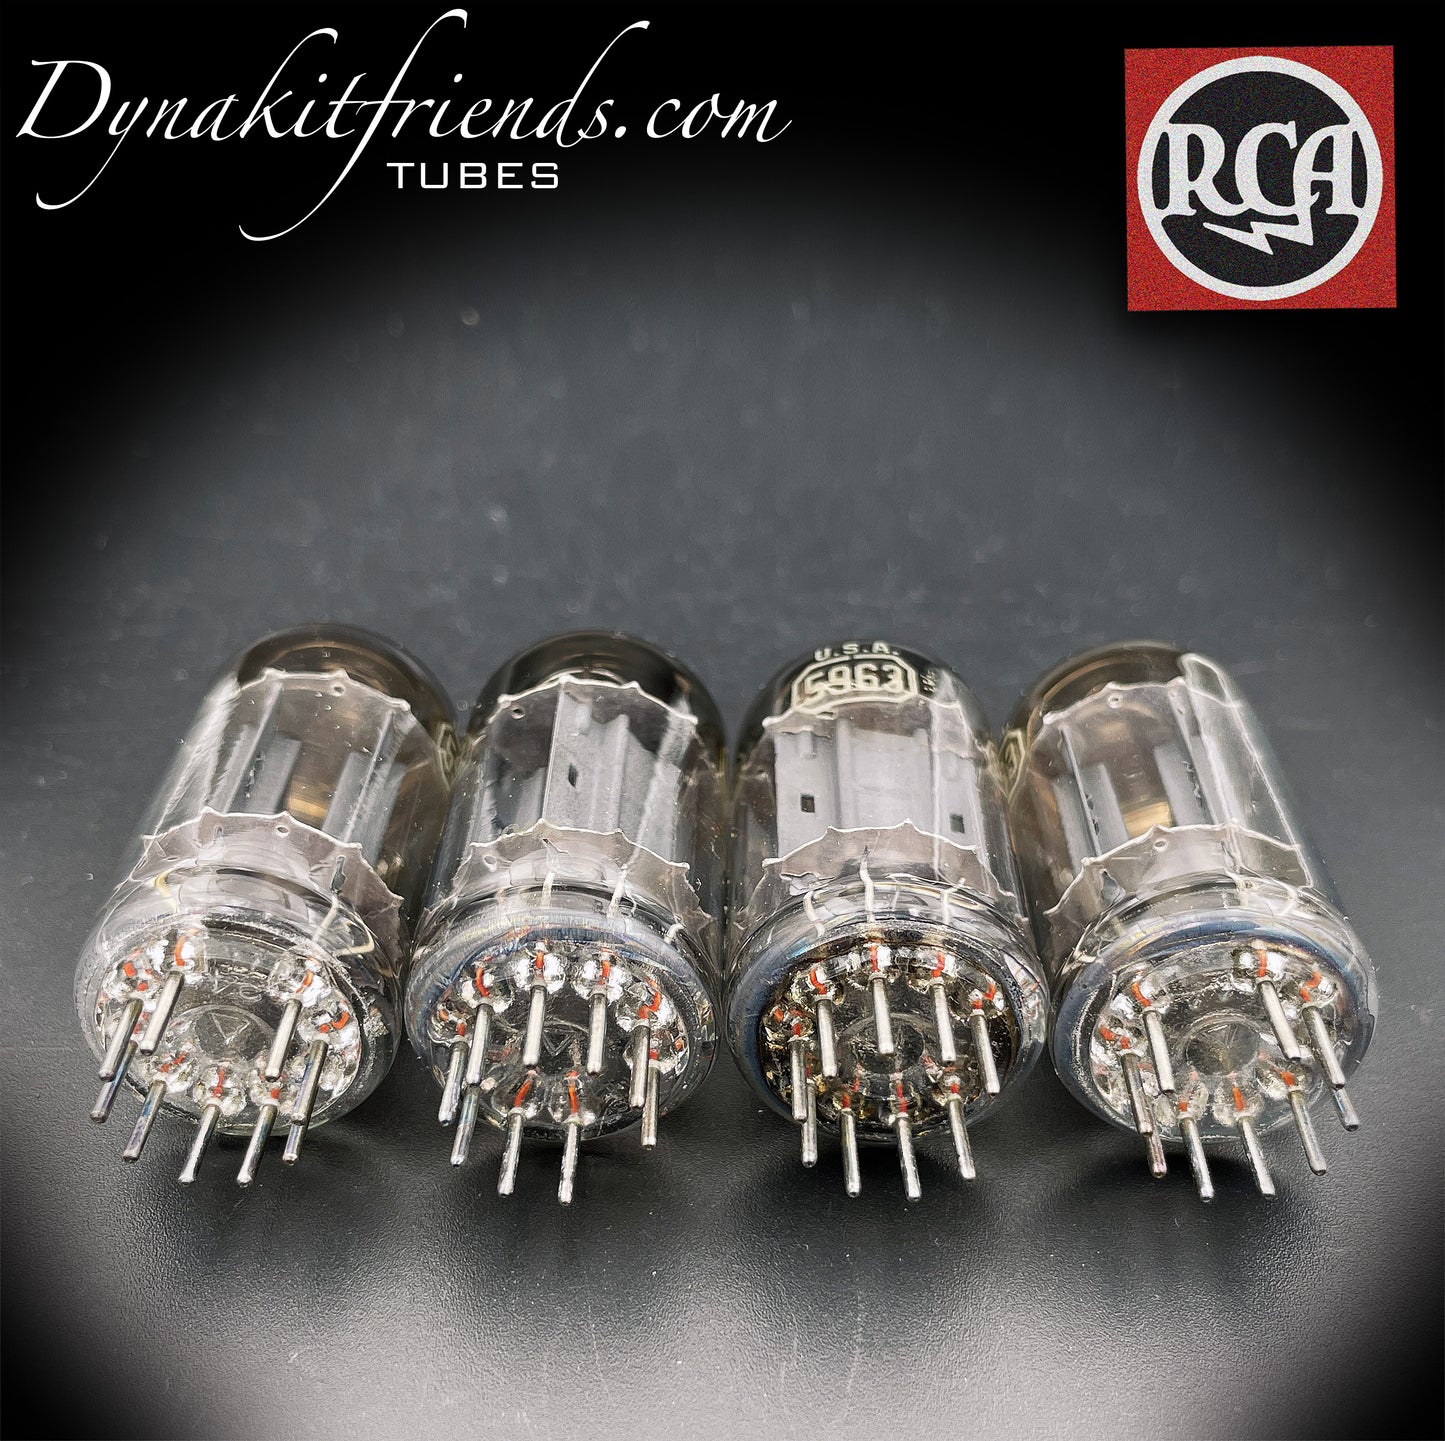 5963 (ECC82 12AU7 WA) RCA NOS-angepasste Röhren Geräuscharme und abgestimmte Mikrofon-Röhren Hergestellt in den USA